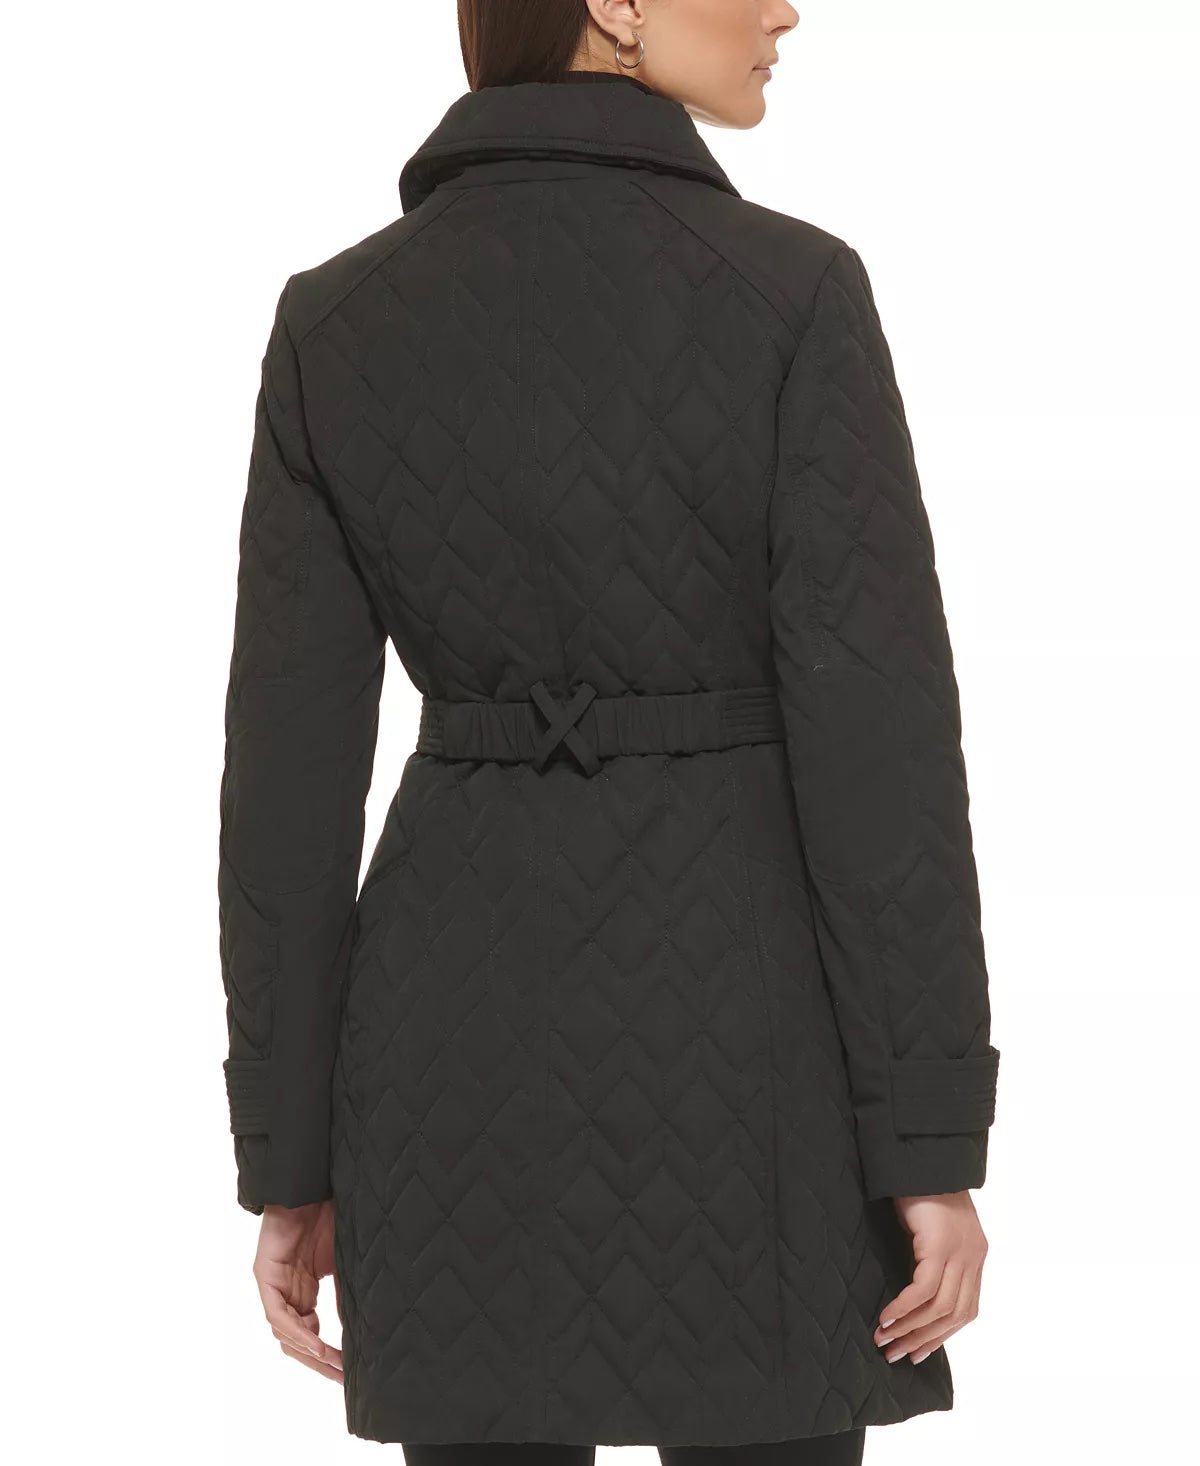 GUESS Women's Asymmetric Diamond-Quilted Coat Black XL NO BELT